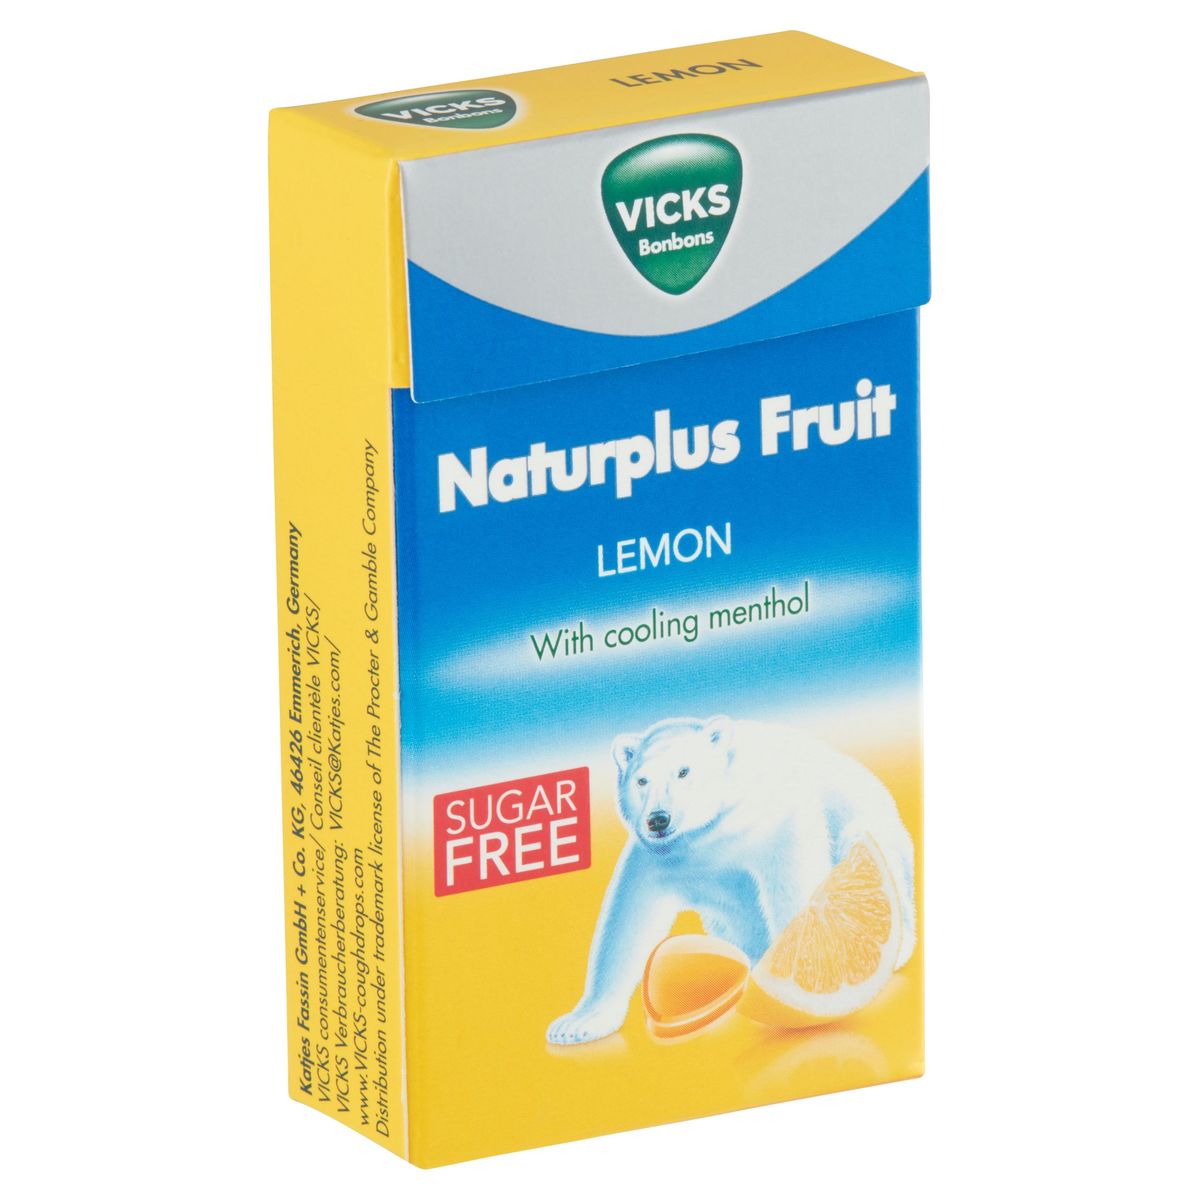 Vicks Bonbons Naturplus Fruit Lemon Sugar Free 40 g